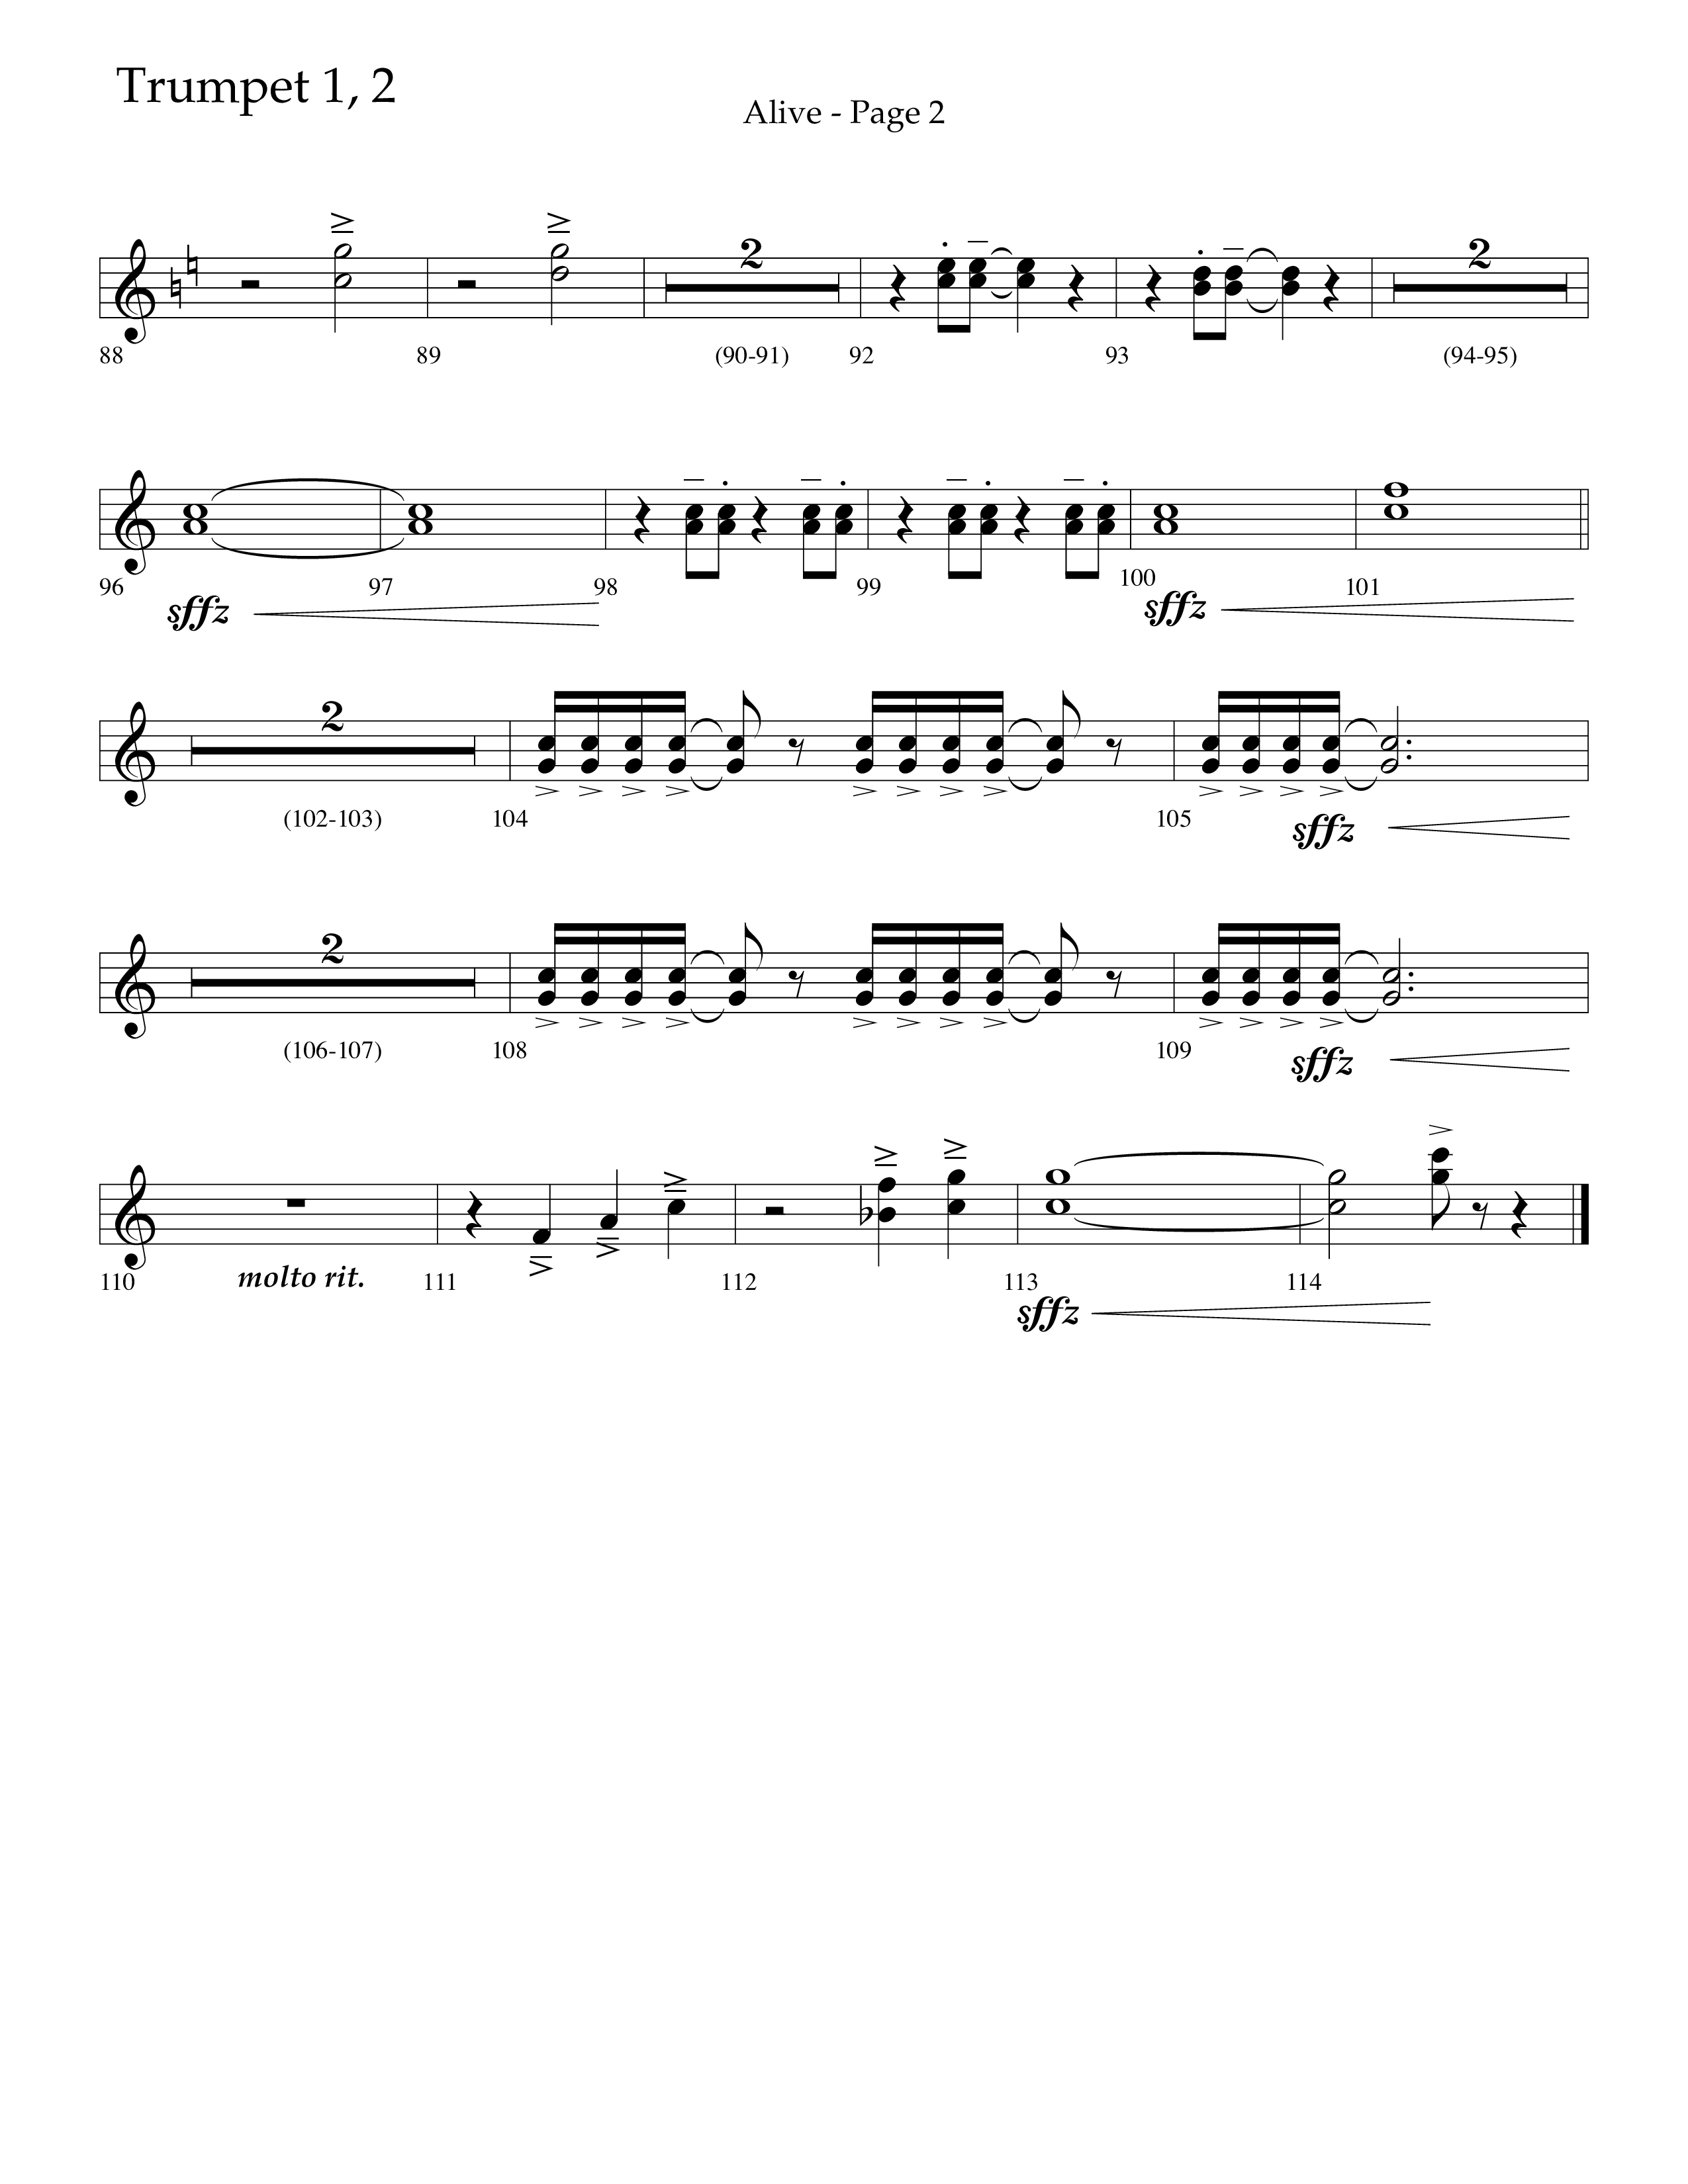 Alive (Mary Magdalene) (Choral Anthem SATB) Trumpet 1,2 (Lifeway Choral / Arr. Travis Cottrell / Orch. Phillip Keveren)